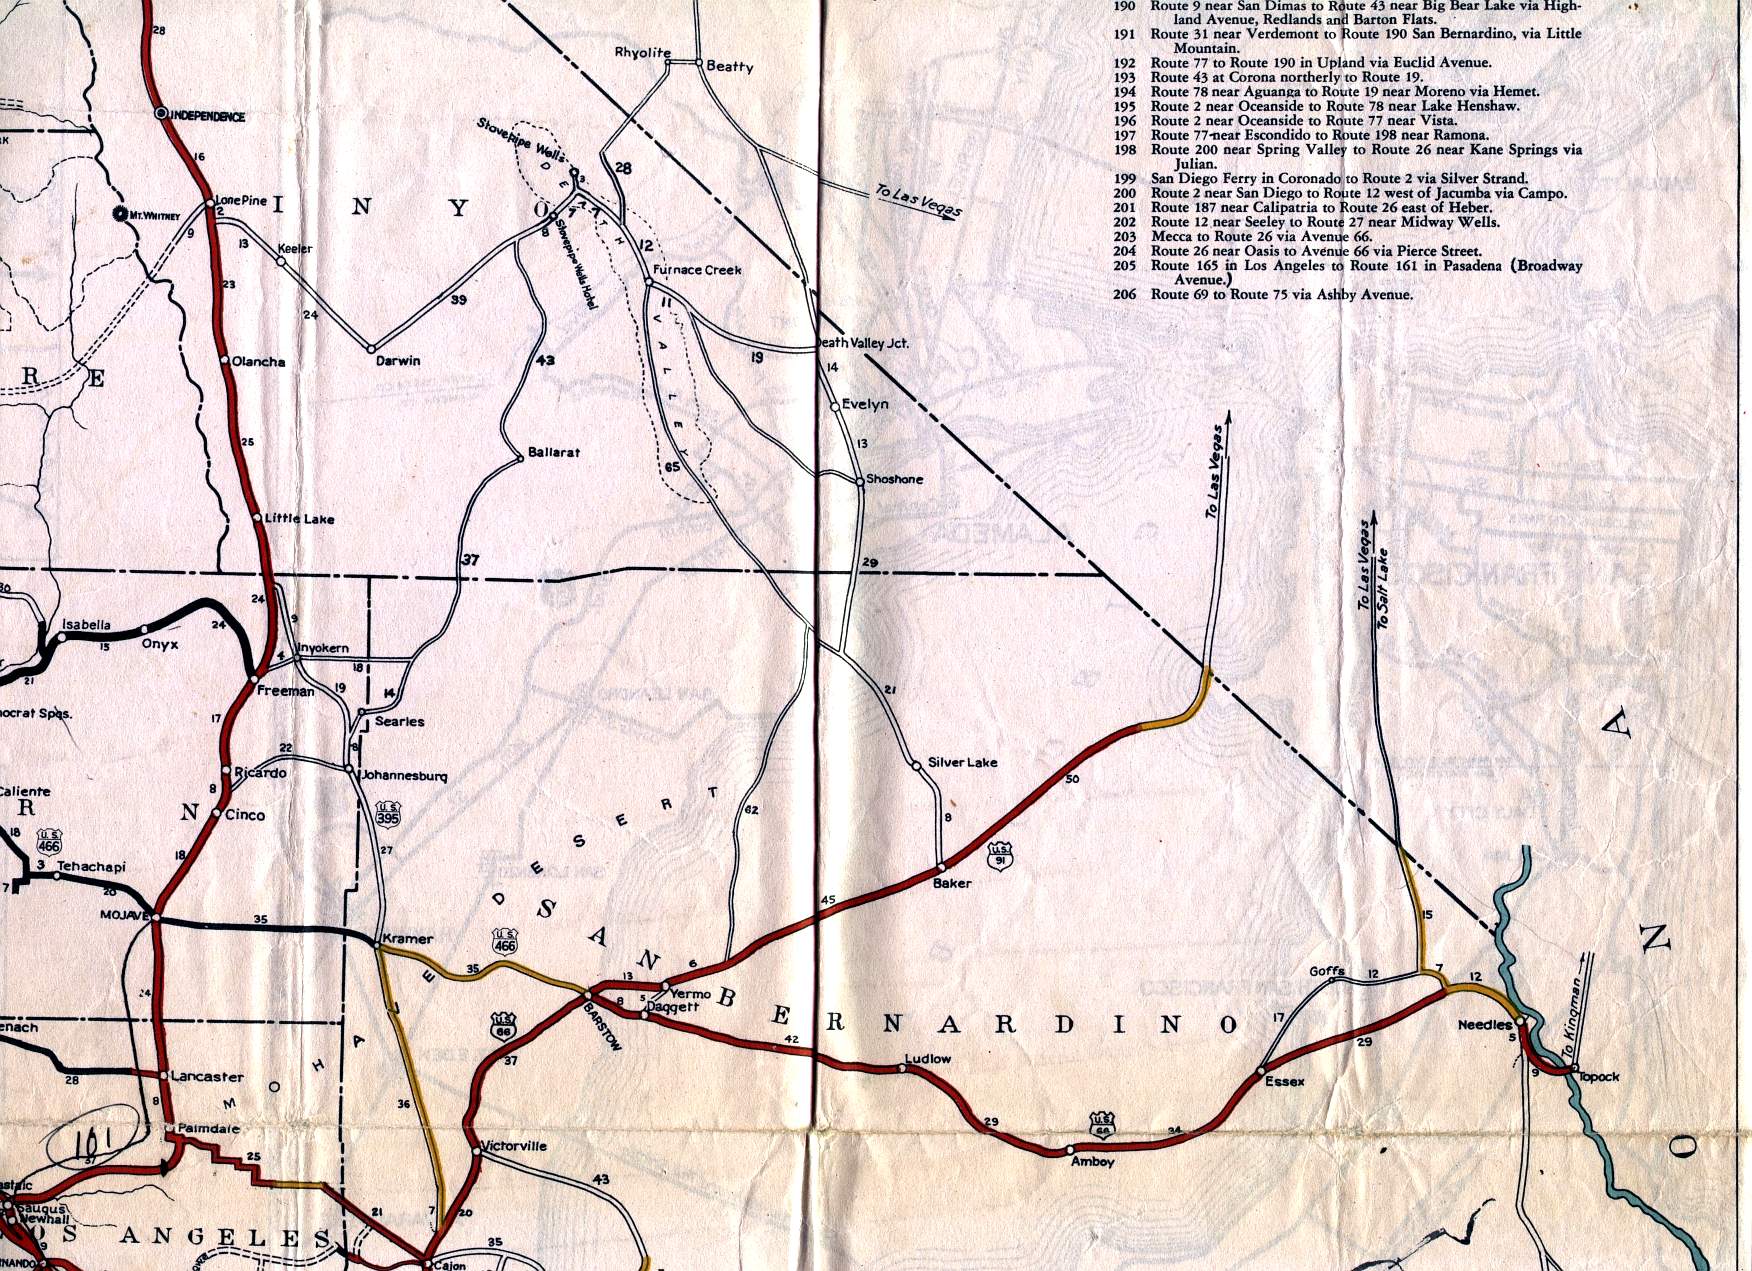 San Bernardino on the 1936 California official highway map